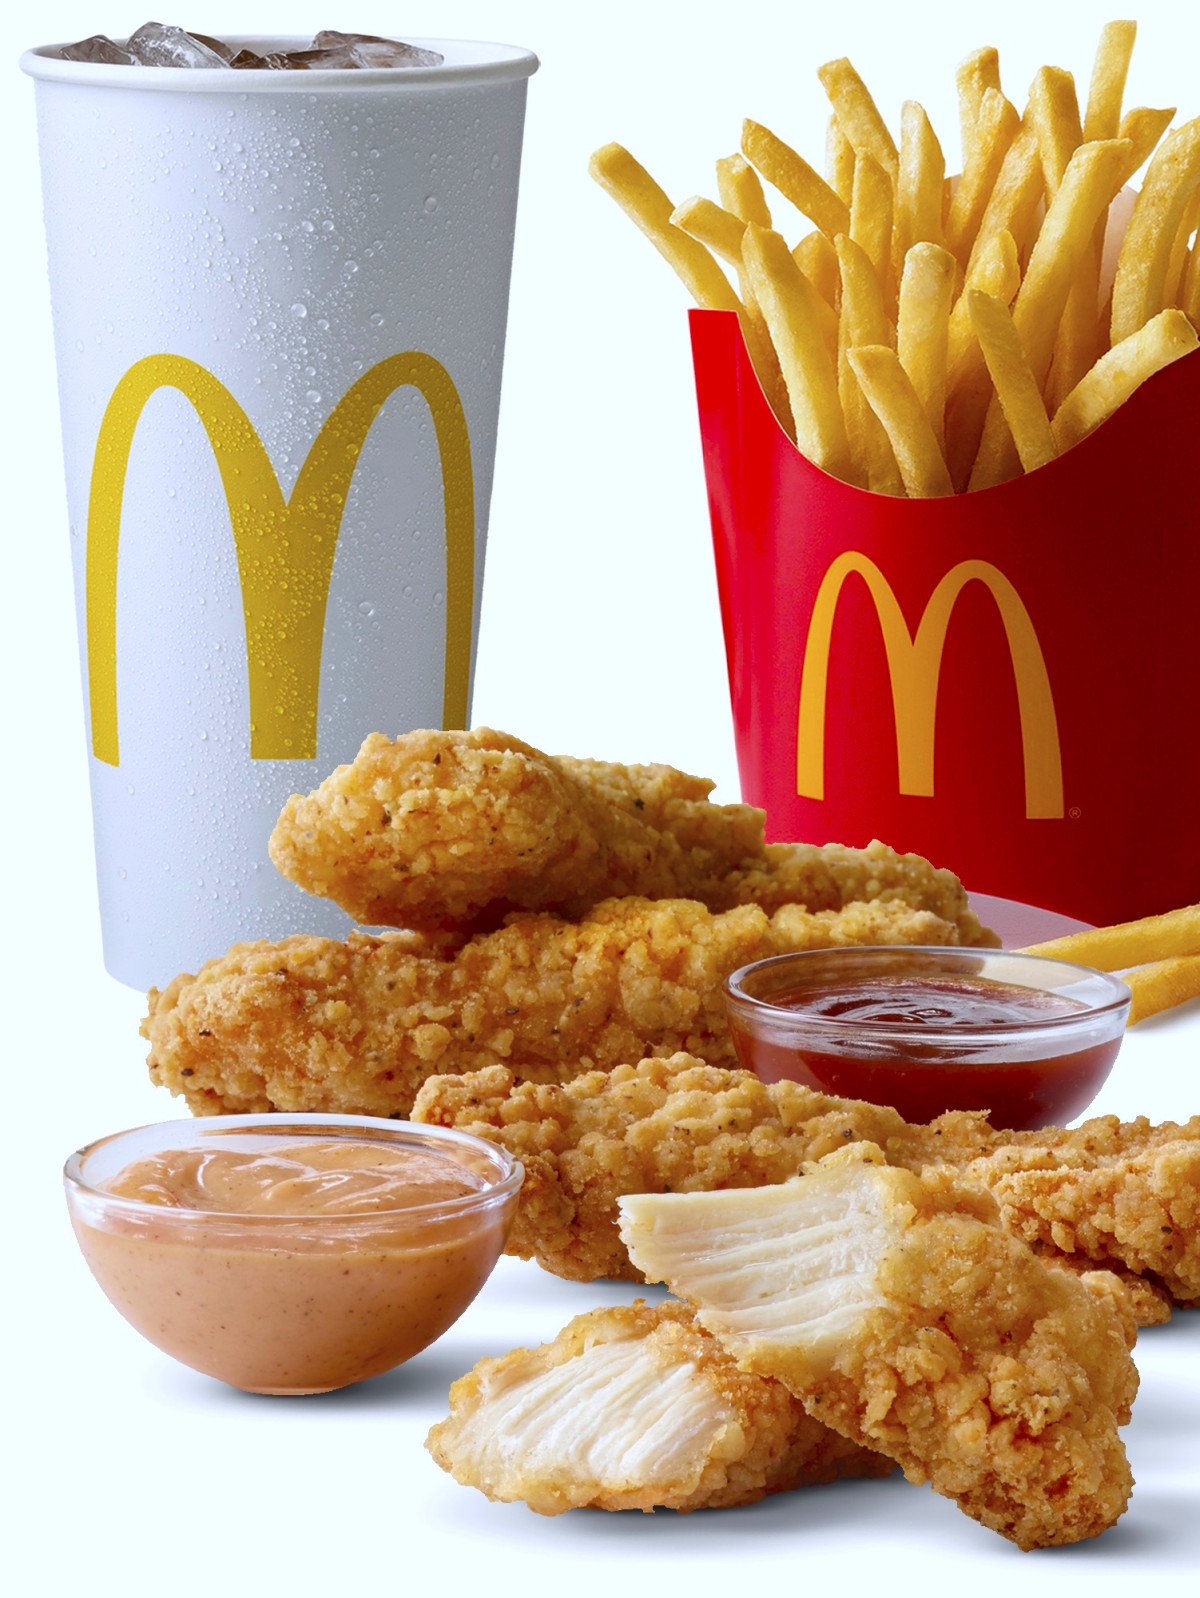 Mcdonalds Chicken Tenders
 McDonald s wages battle in chicken wars with Buttermilk